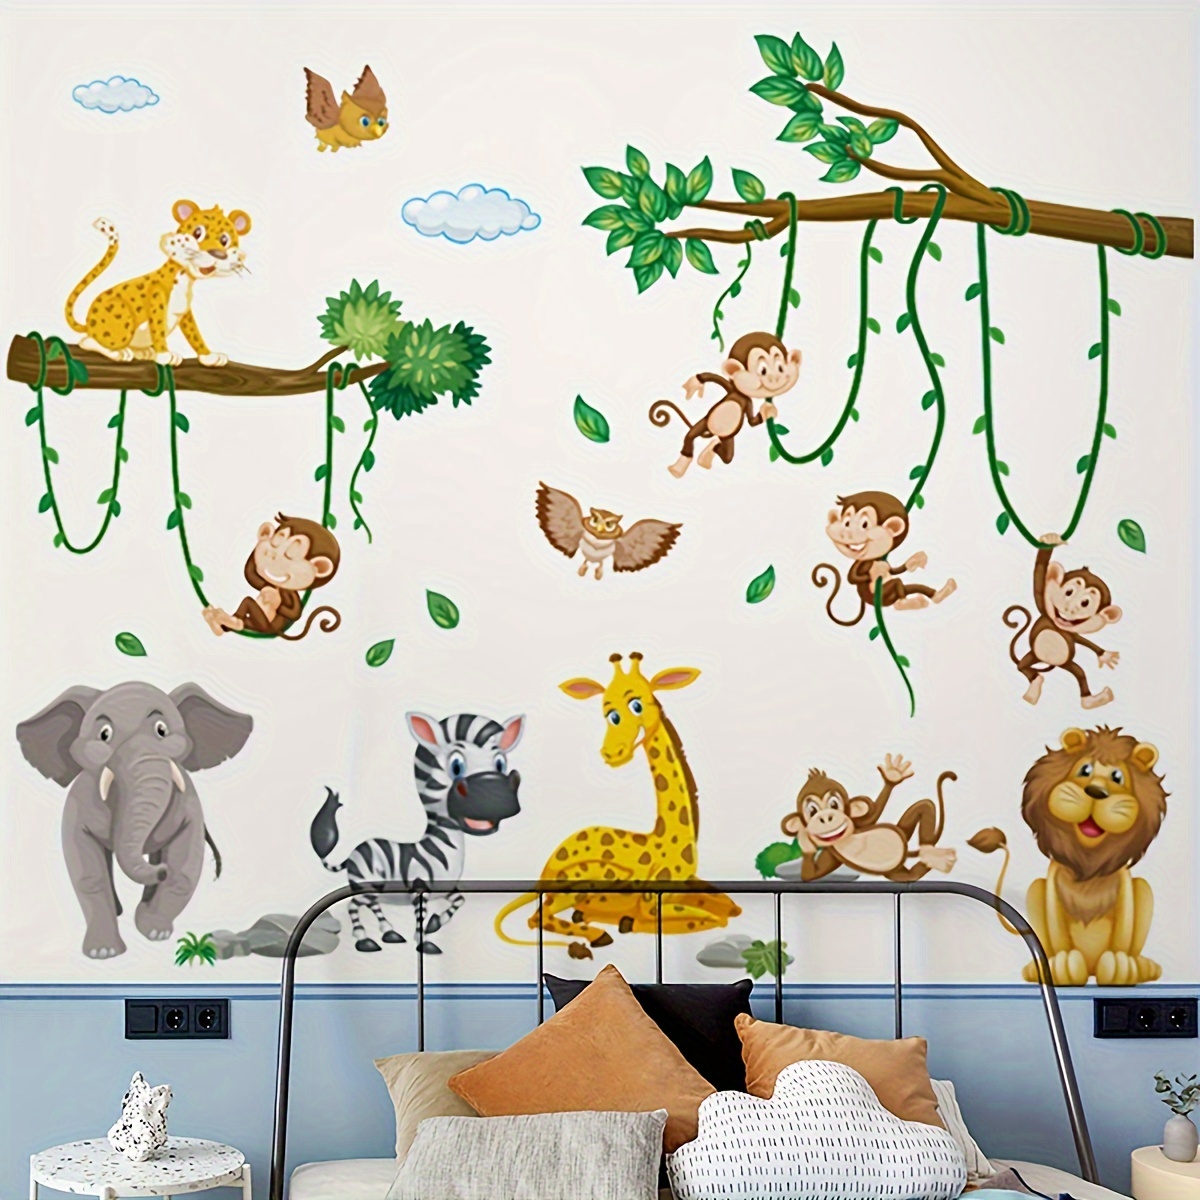 

2pcs Cartoon Animal Wall Decals, Removable Wall Stickers, Owl/ Monkey/ Lion/ Zebra/ Elephant, For Room/ Nursery Playroom/ School Classroom Decoration